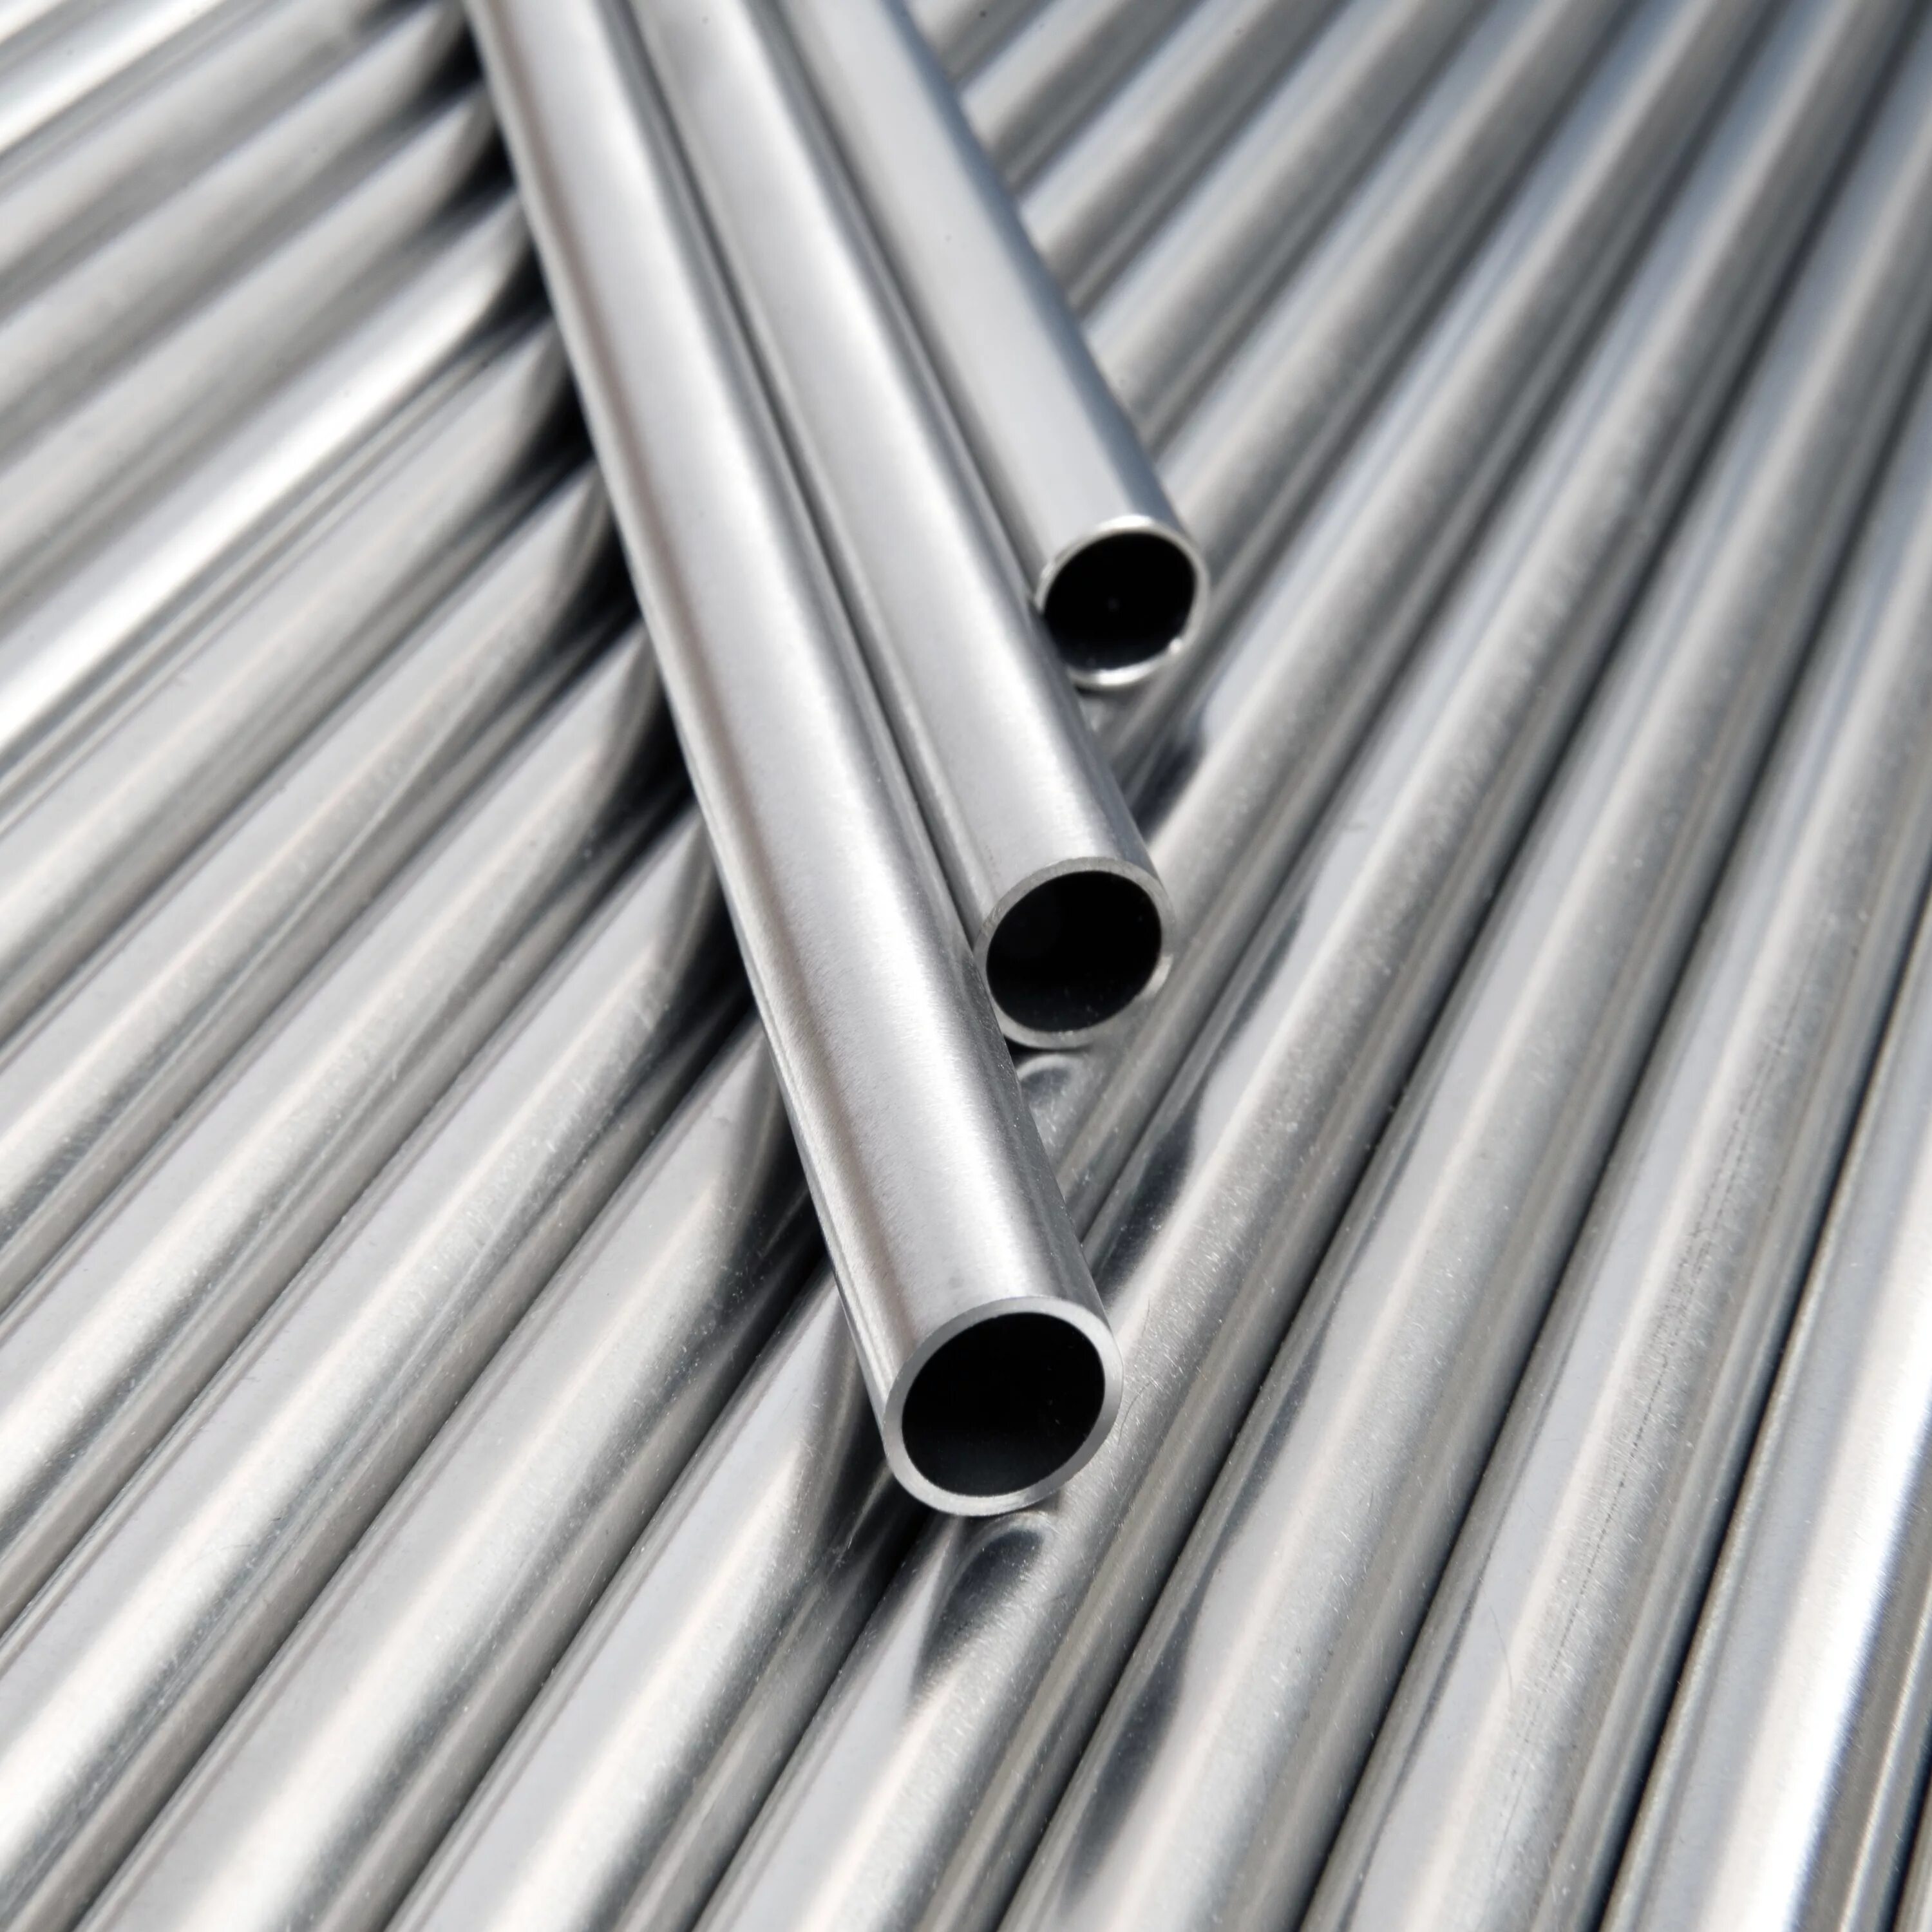 Metal tubes. Stainless Steel Welded Pipe/tube. 410 Stainless Steel Pipe. Труба нержавеющая AISI 304 104*2. Welded Stainless Steel Pipe.